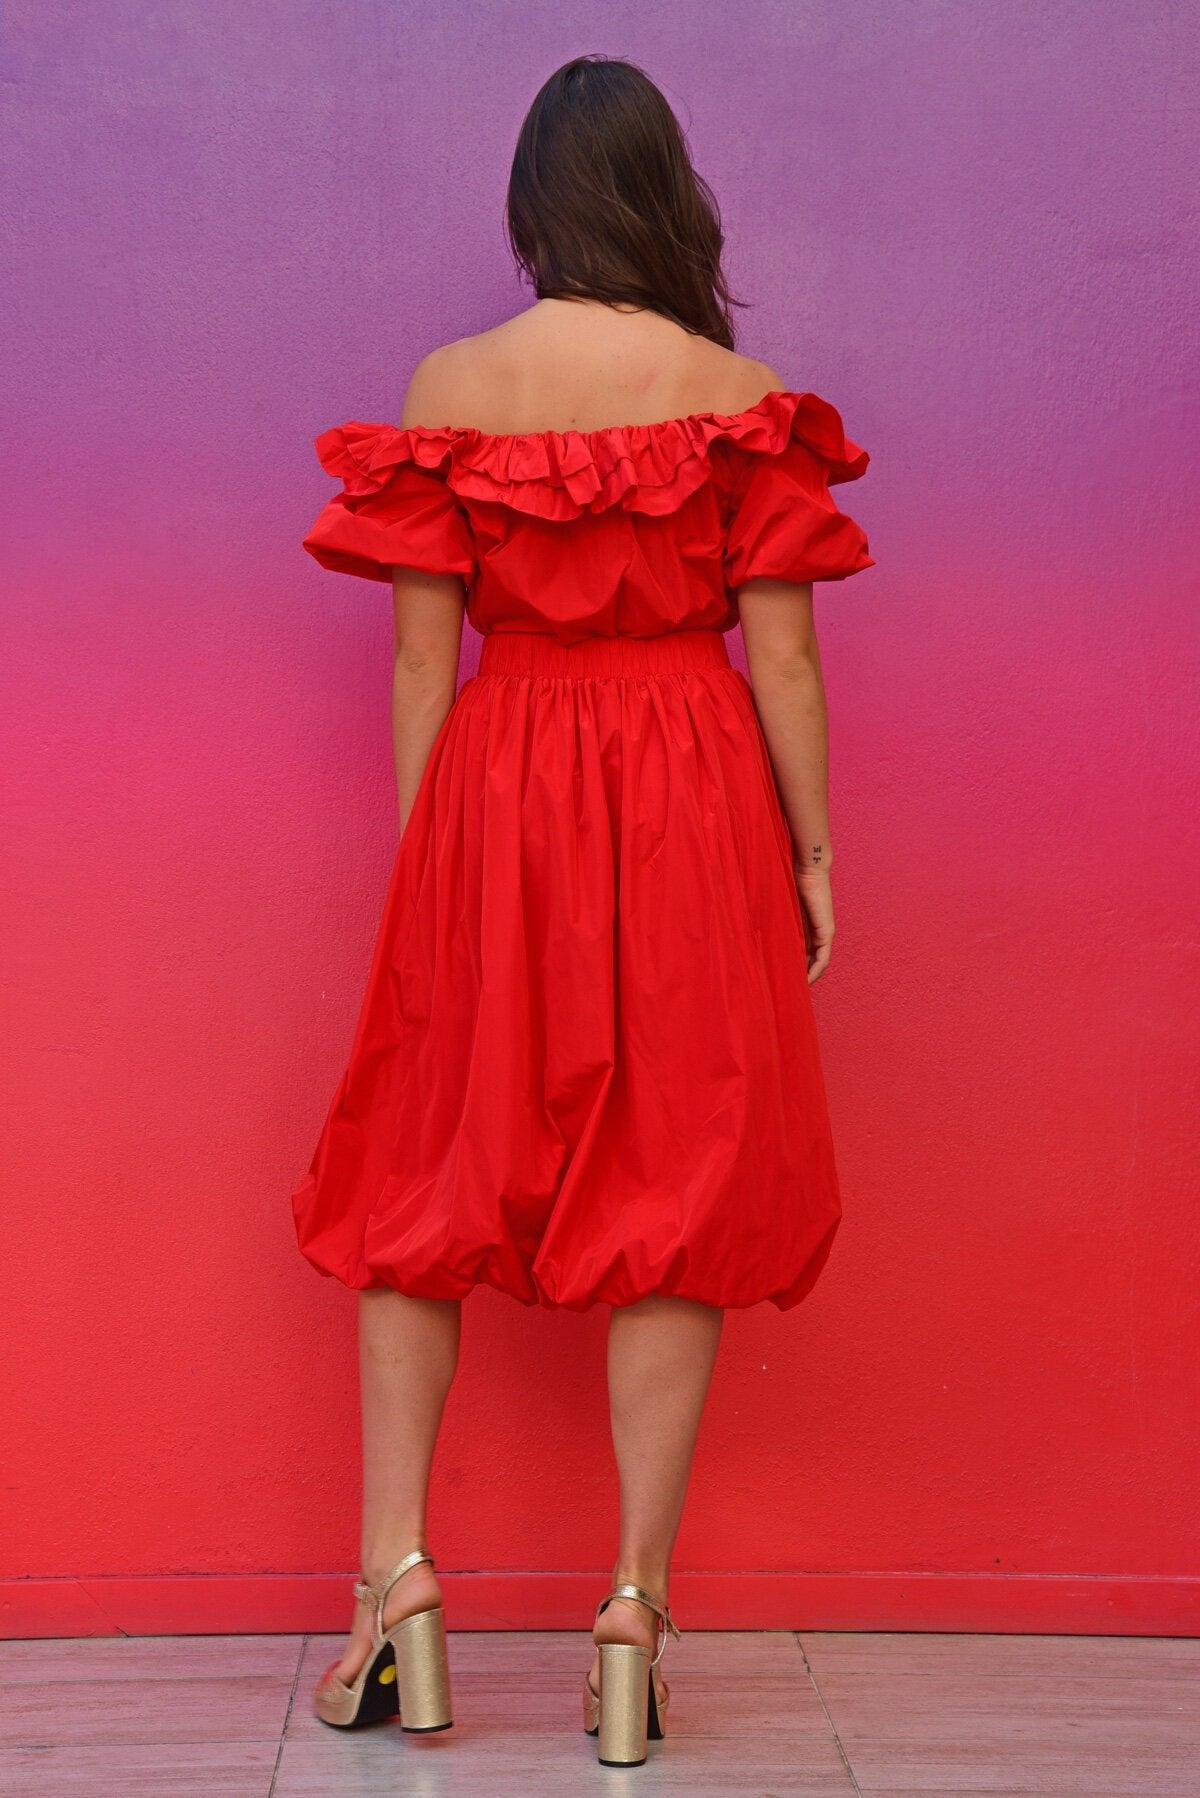 Trelise Cooper HOT PUFF Skirt - Red - Pinkhill, Darwin boutique, Australian high end fashion, Darwin Fashion